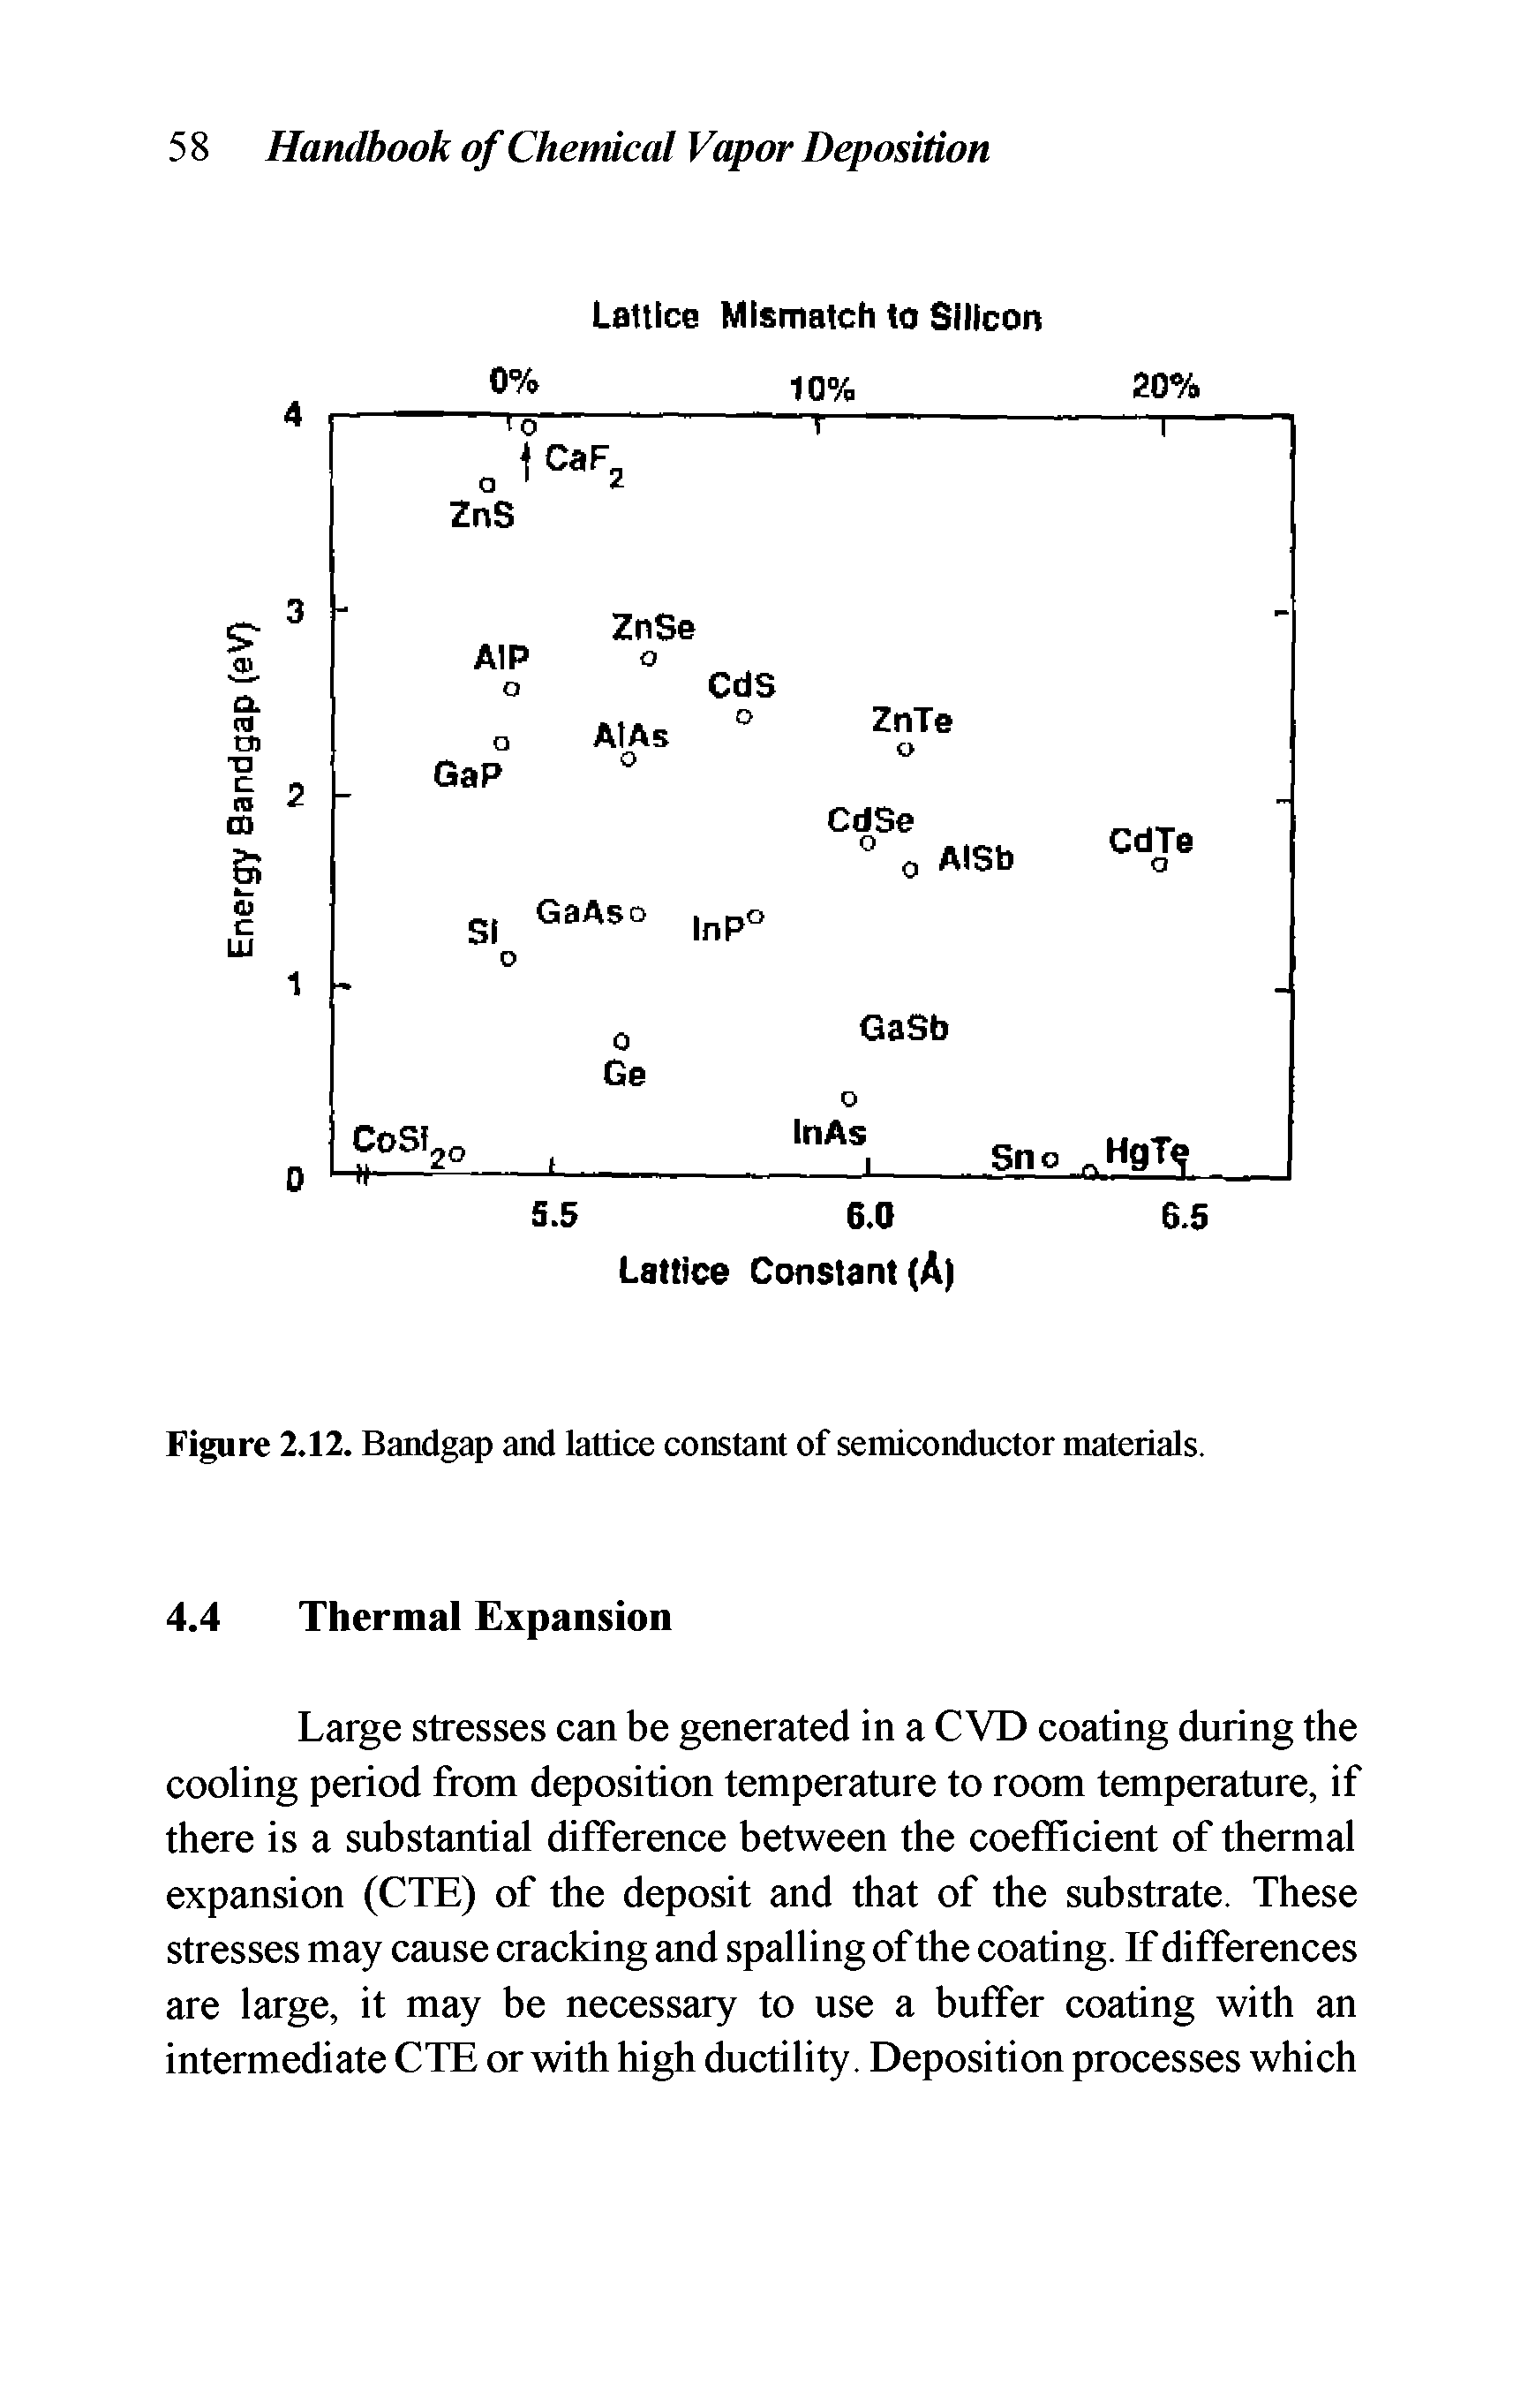 Figure 2.12. Bandgap and lattice constant of semiconductor materials.